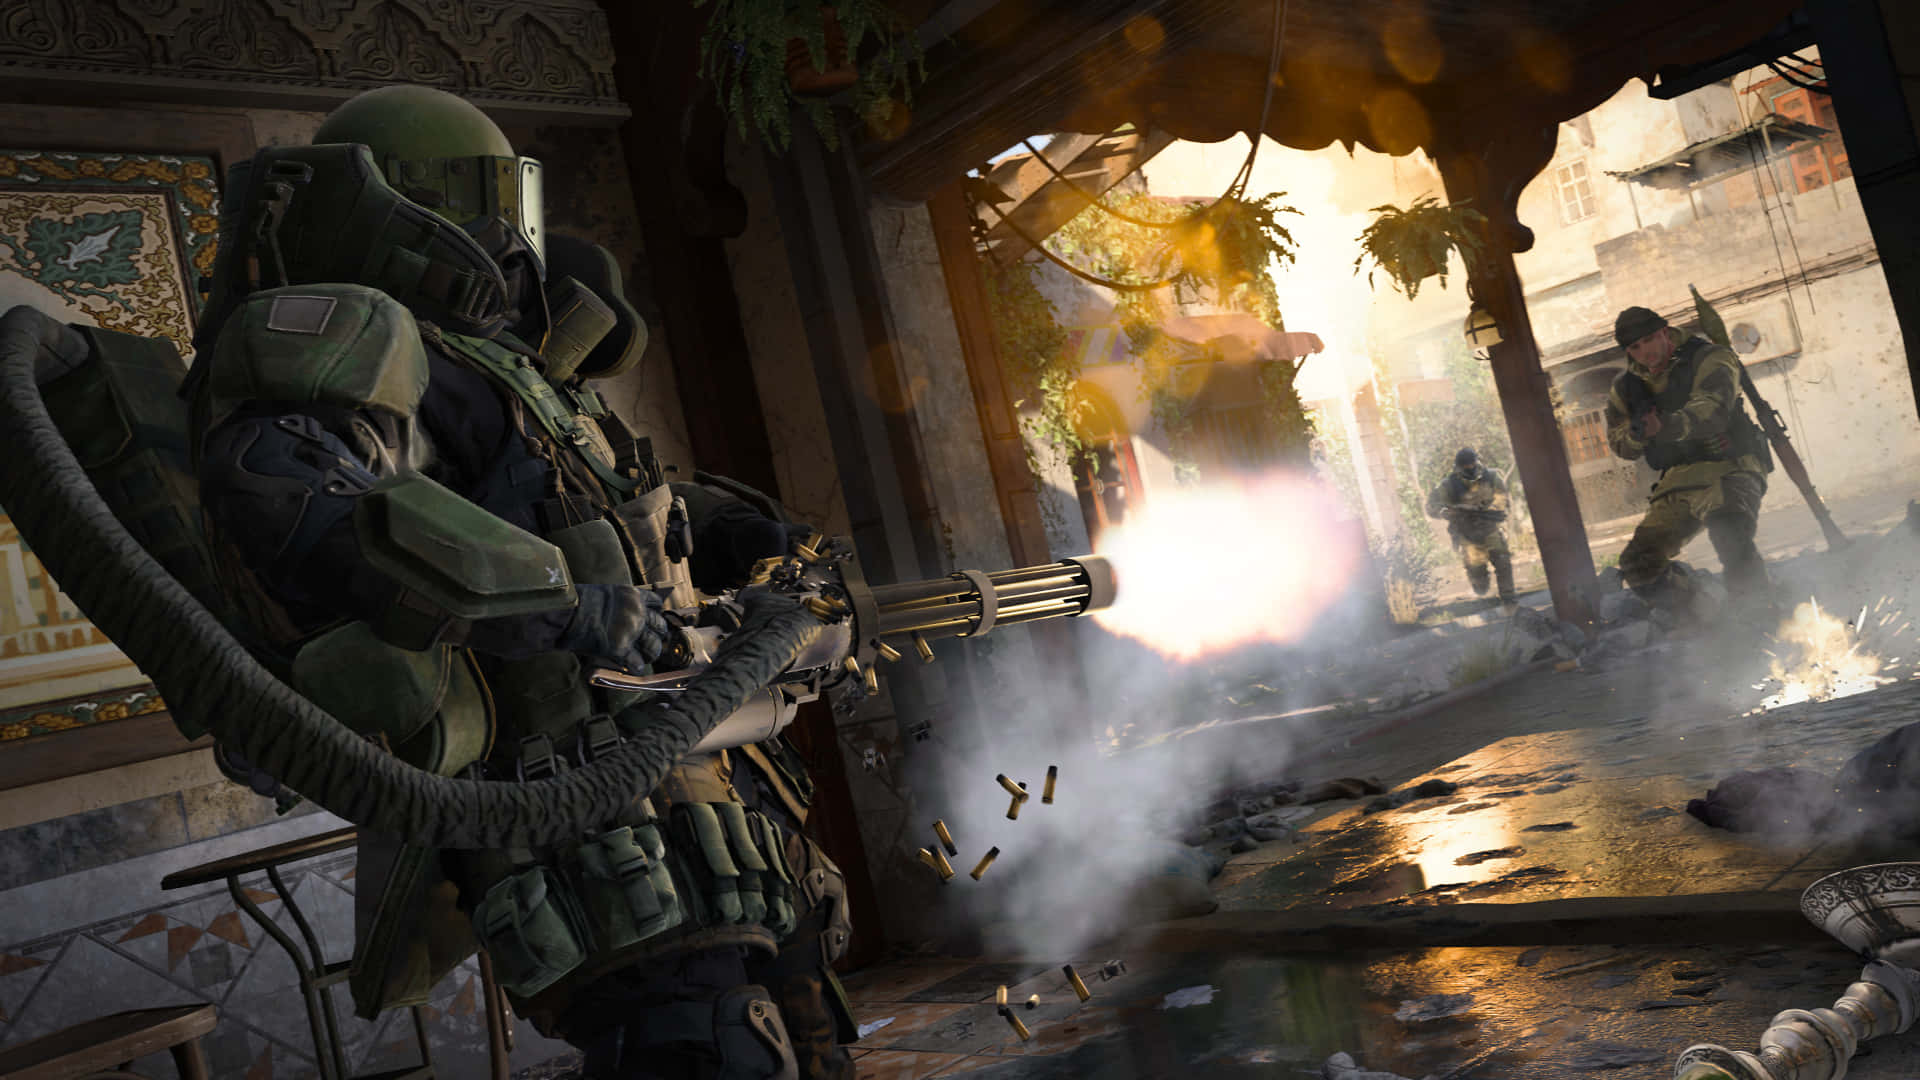 Epic Call of Duty PS4 battle scene Wallpaper